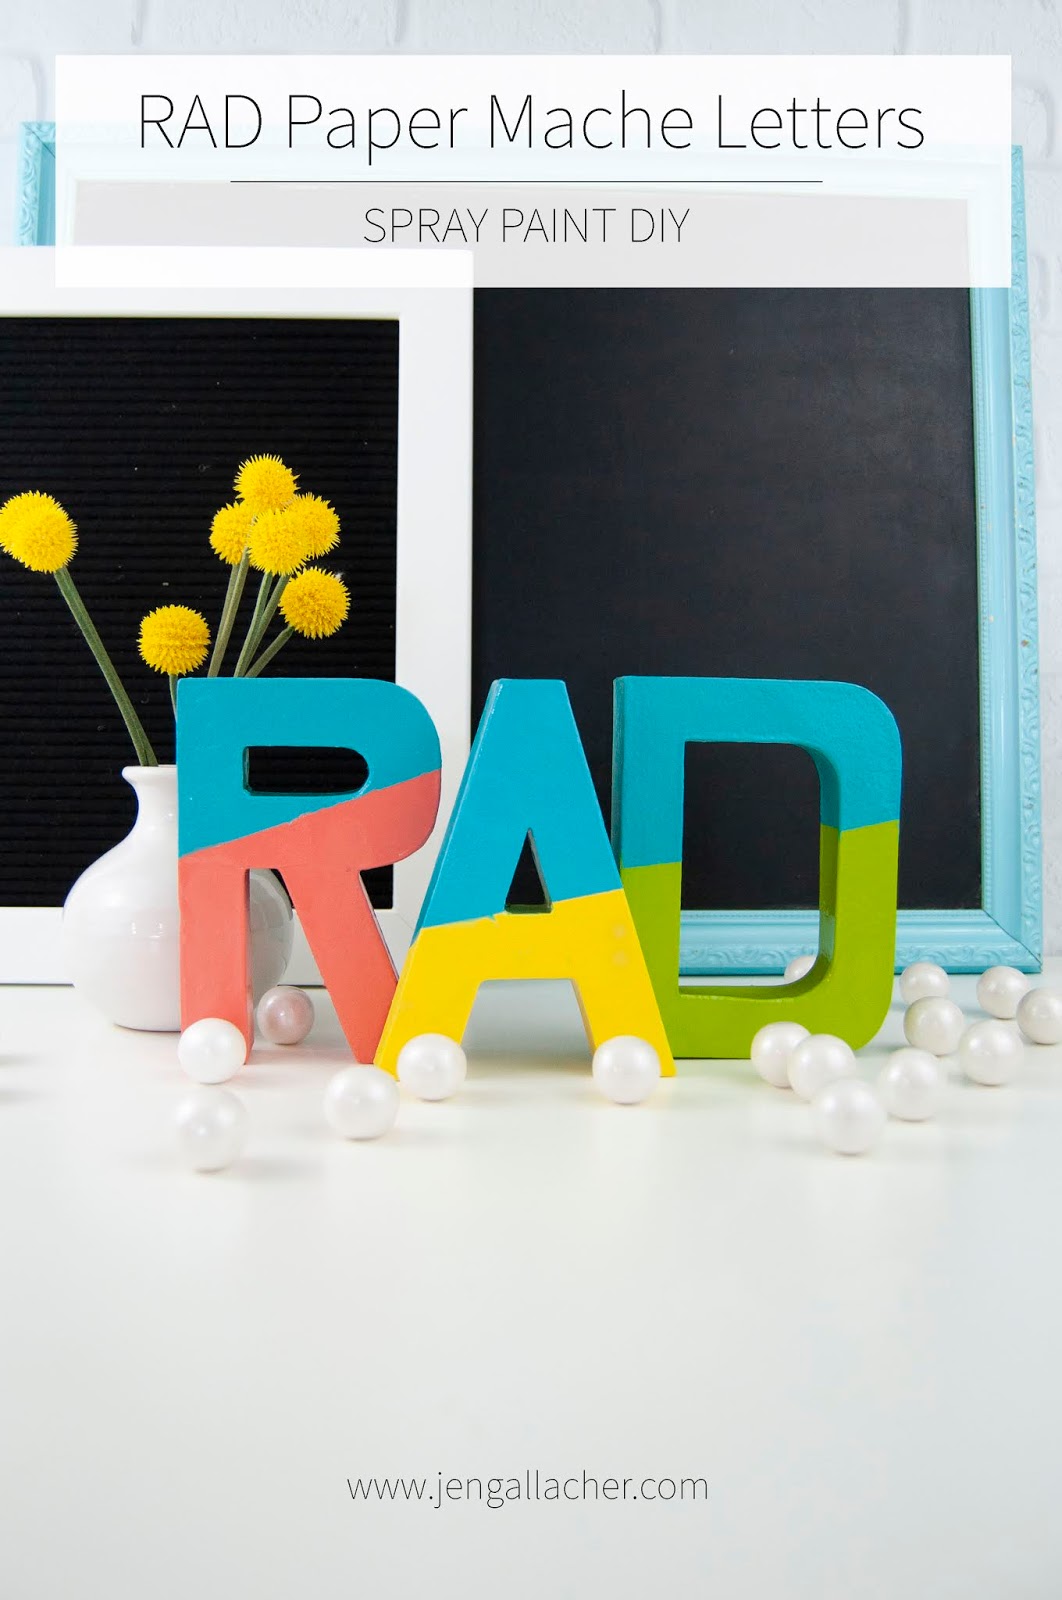 RAD Painted Paper Mache Letters: A Tutorial